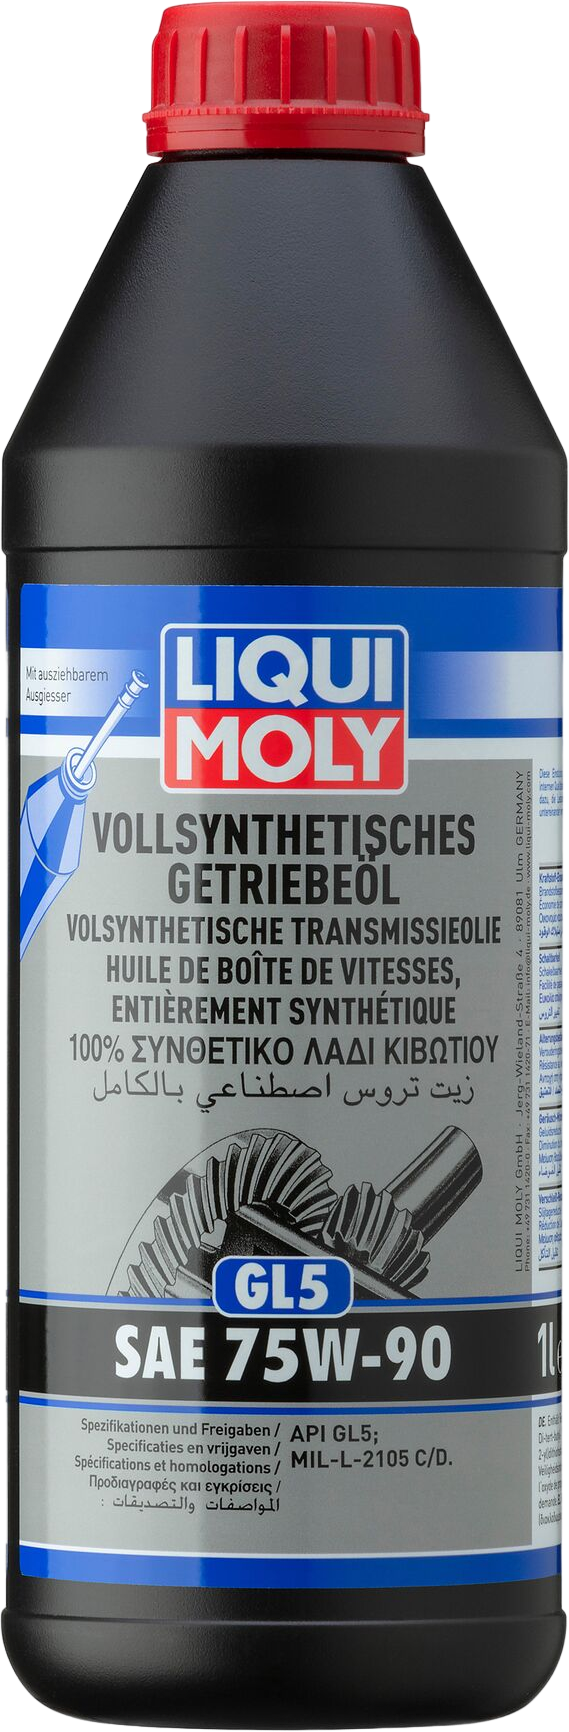 Liqui Moly Volsynthetische transmissieolie (GL5) SAE 75W-90, 1 lt